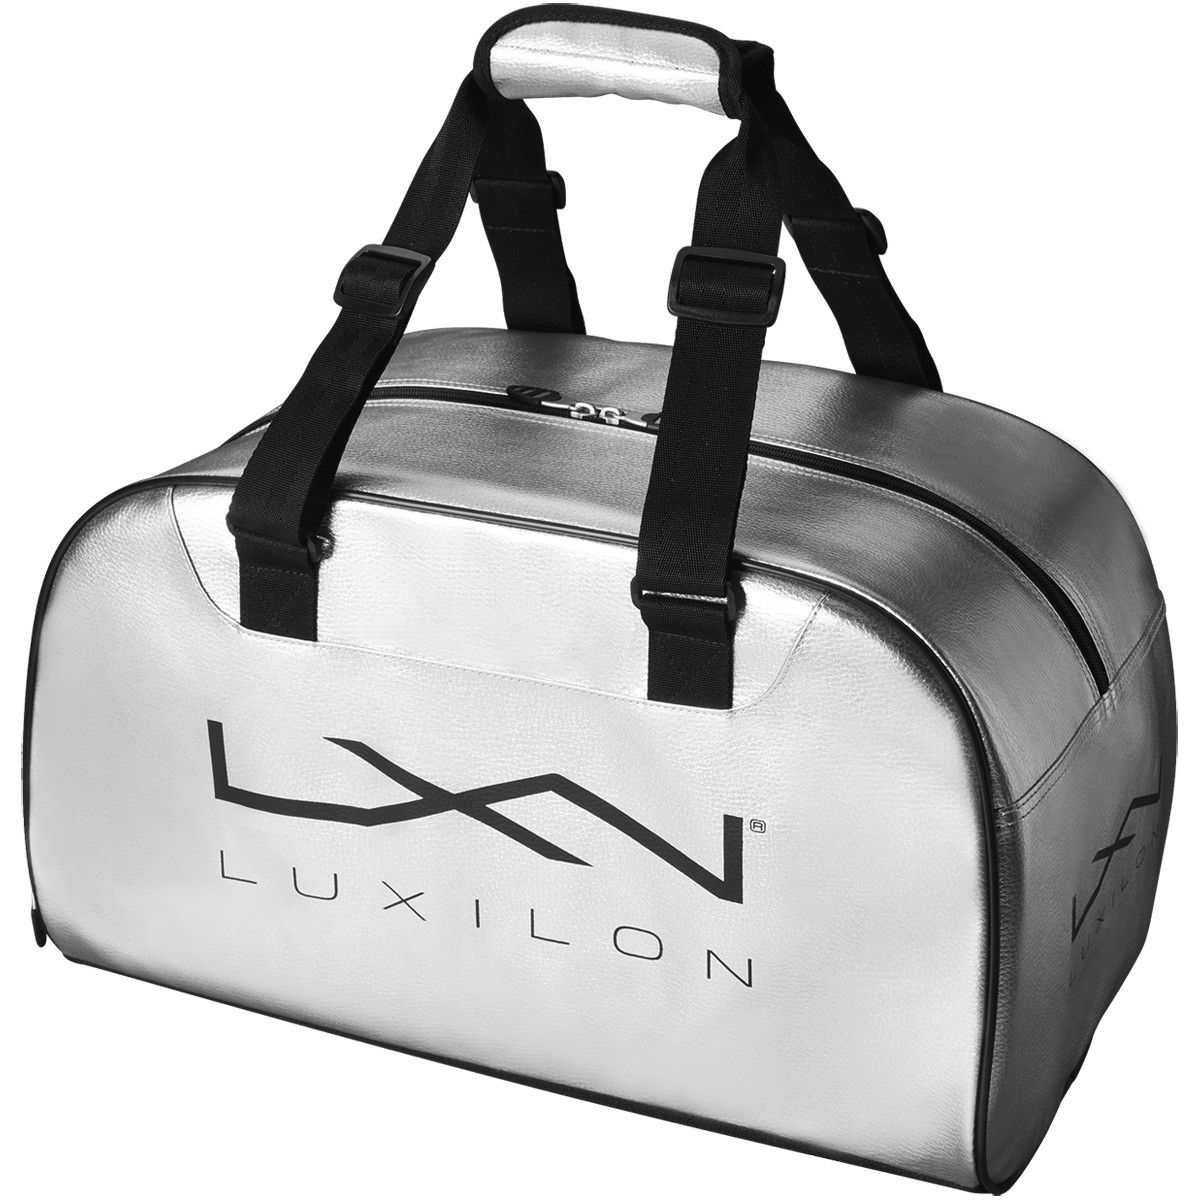 Luxilon LXN Tennis Duffle Bag WR8007601